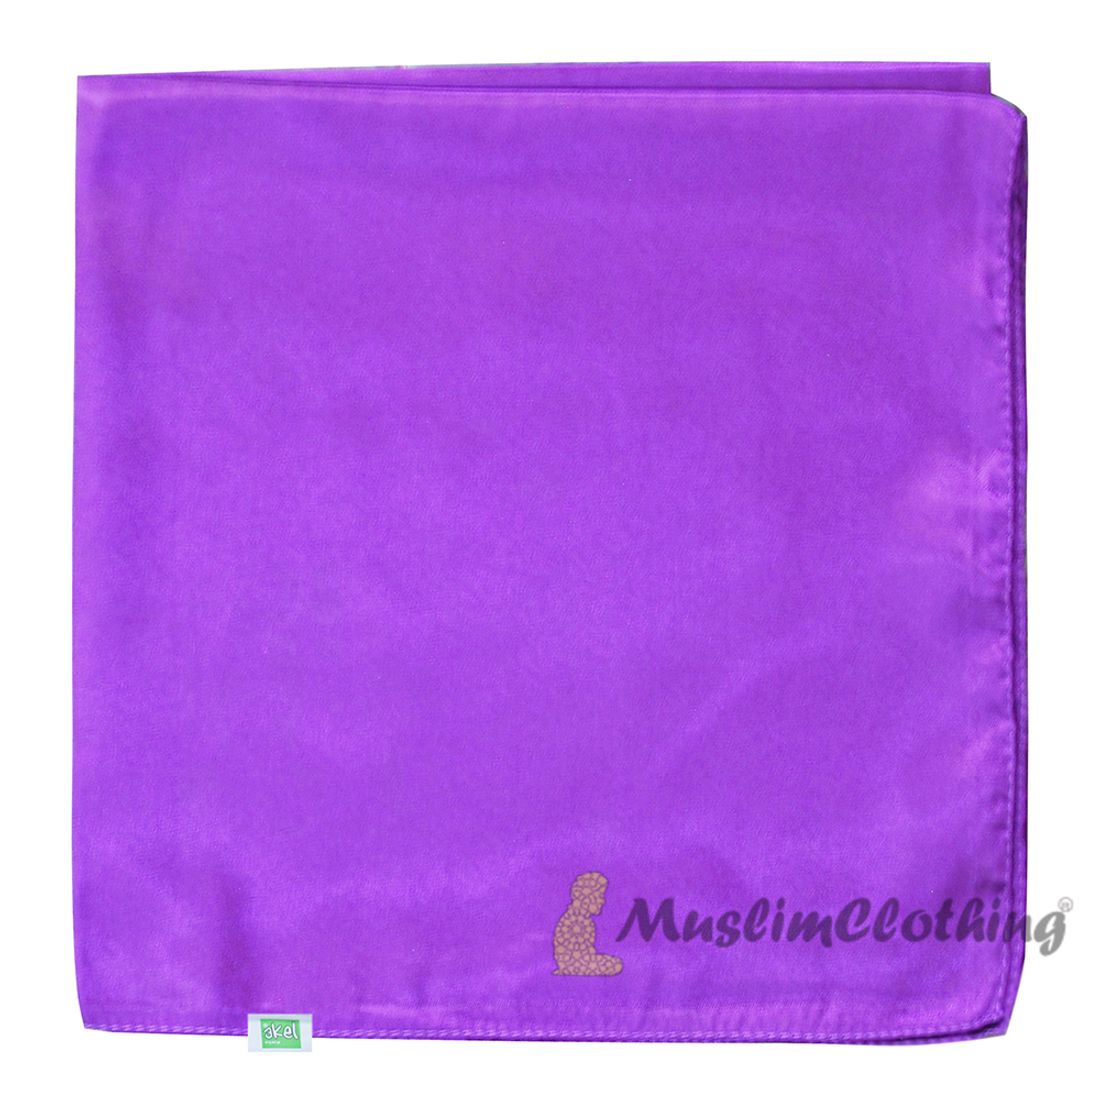 Light Purple Borderless Satin Scarf Hijab Shawl Islamic Headwear